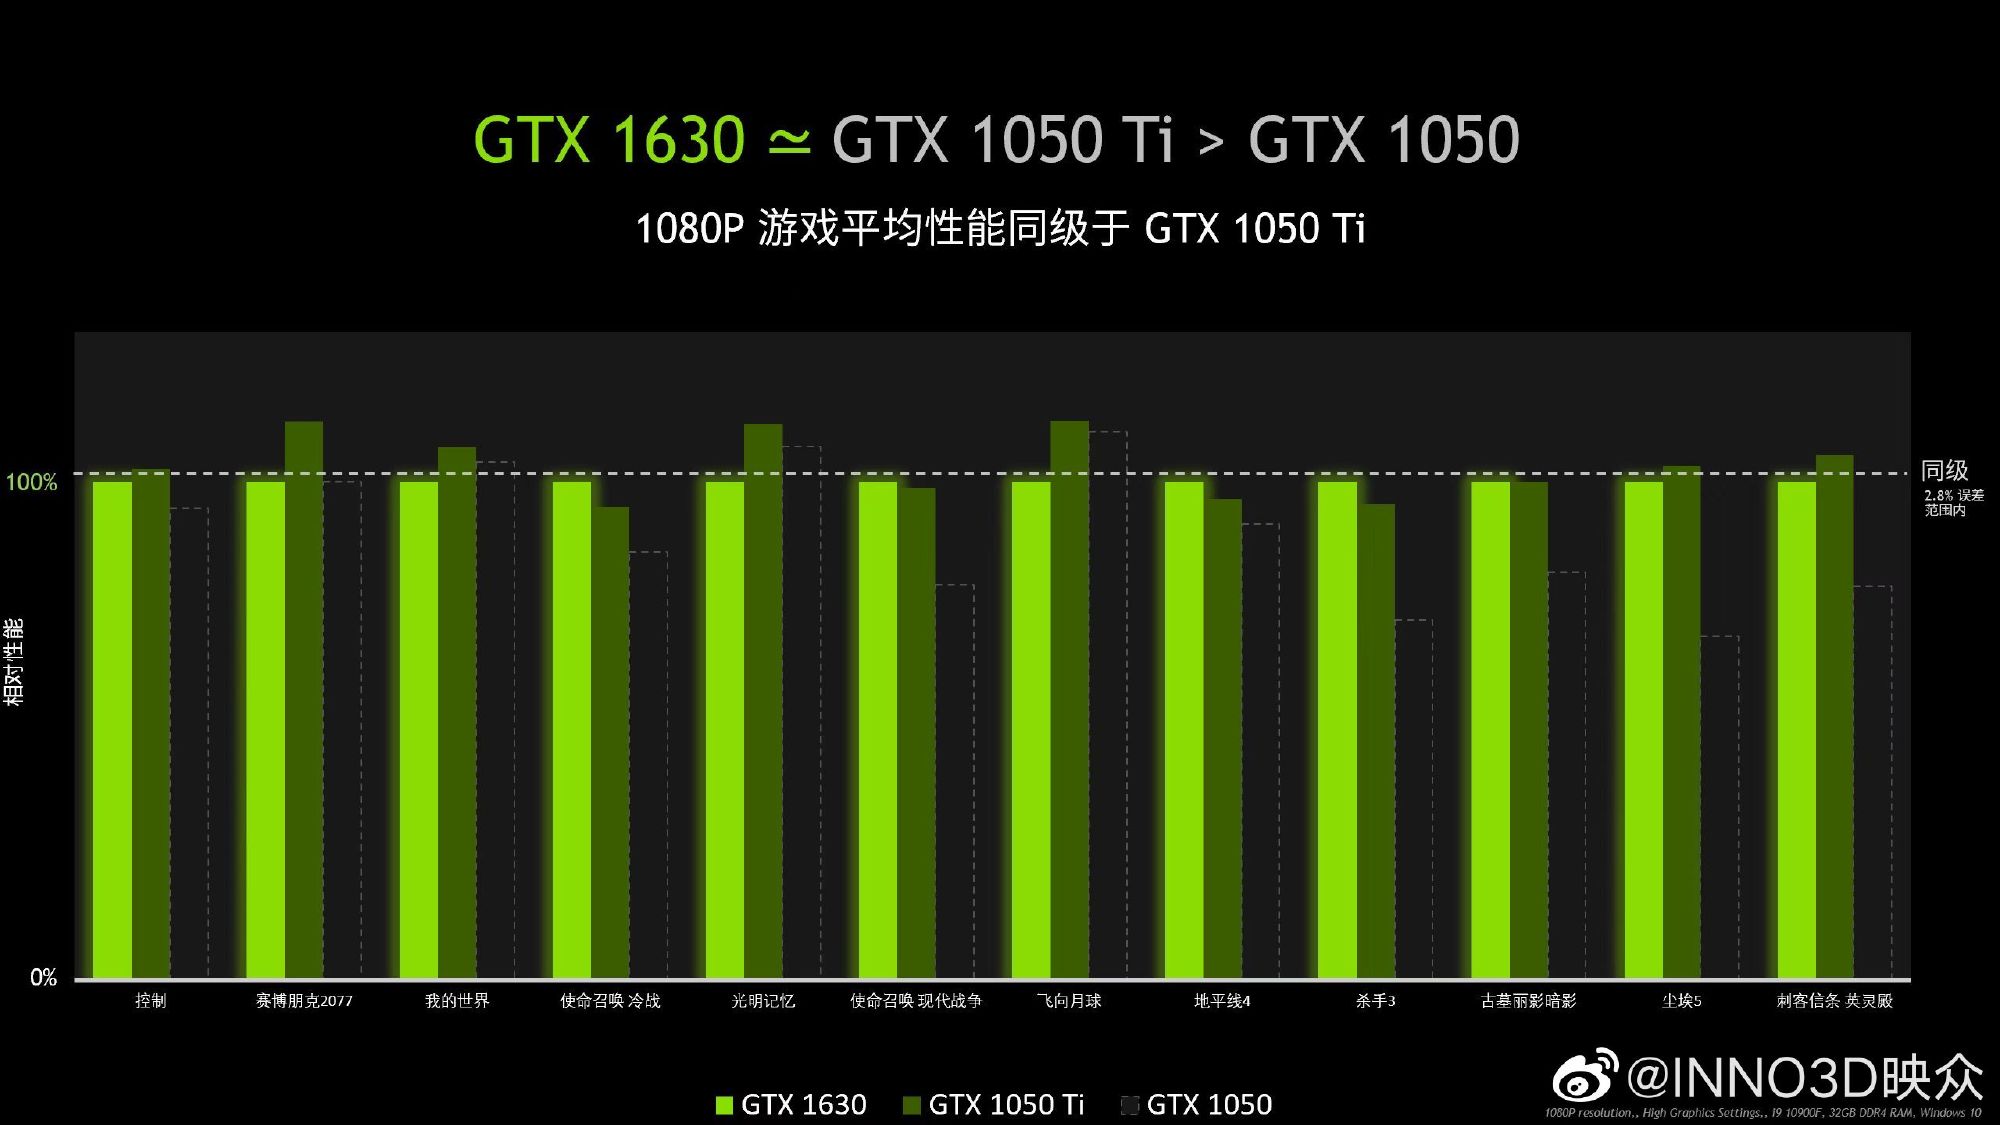 Inno3D GTX 1630 Benchmark Comparison Against GTX 1050 Ti and GTX 1050